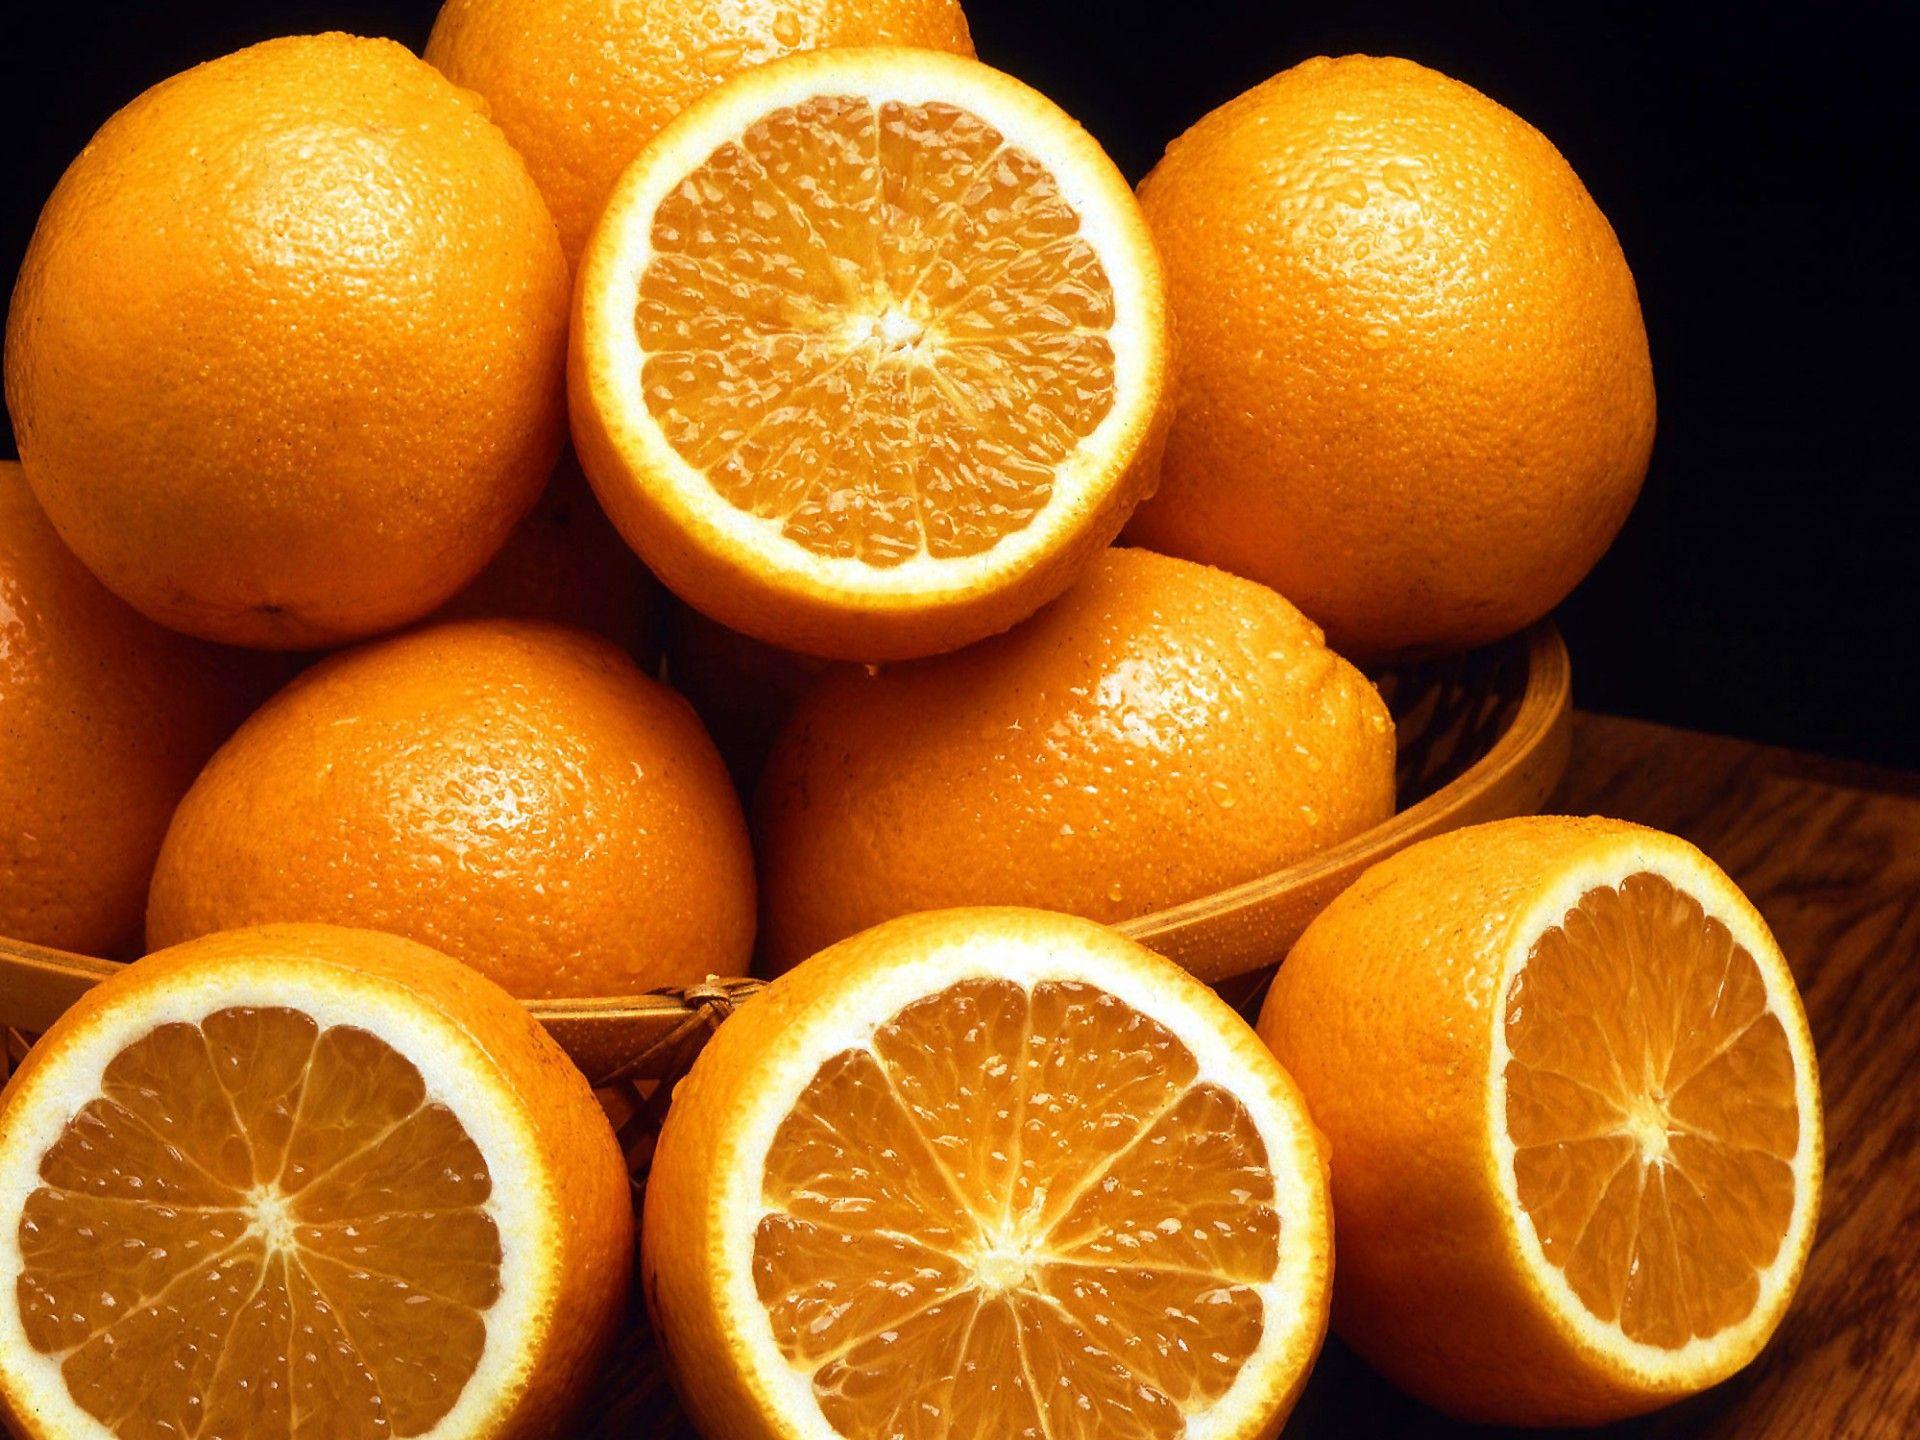 Tasty oranges wallpaper. Tasty oranges